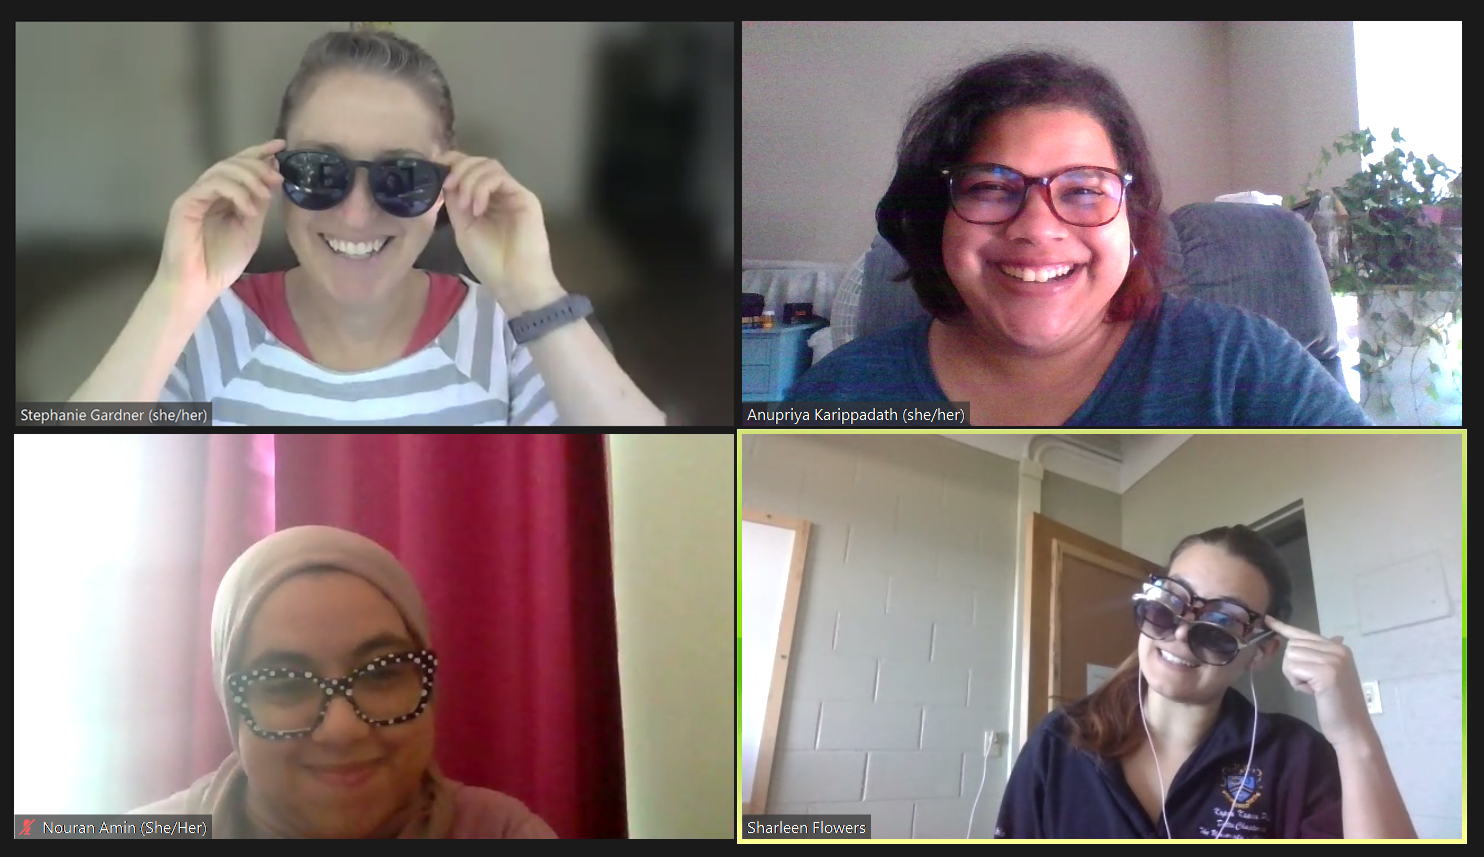 Stephanie, Anupriya, Nouran, and Sharleen meeting virtually